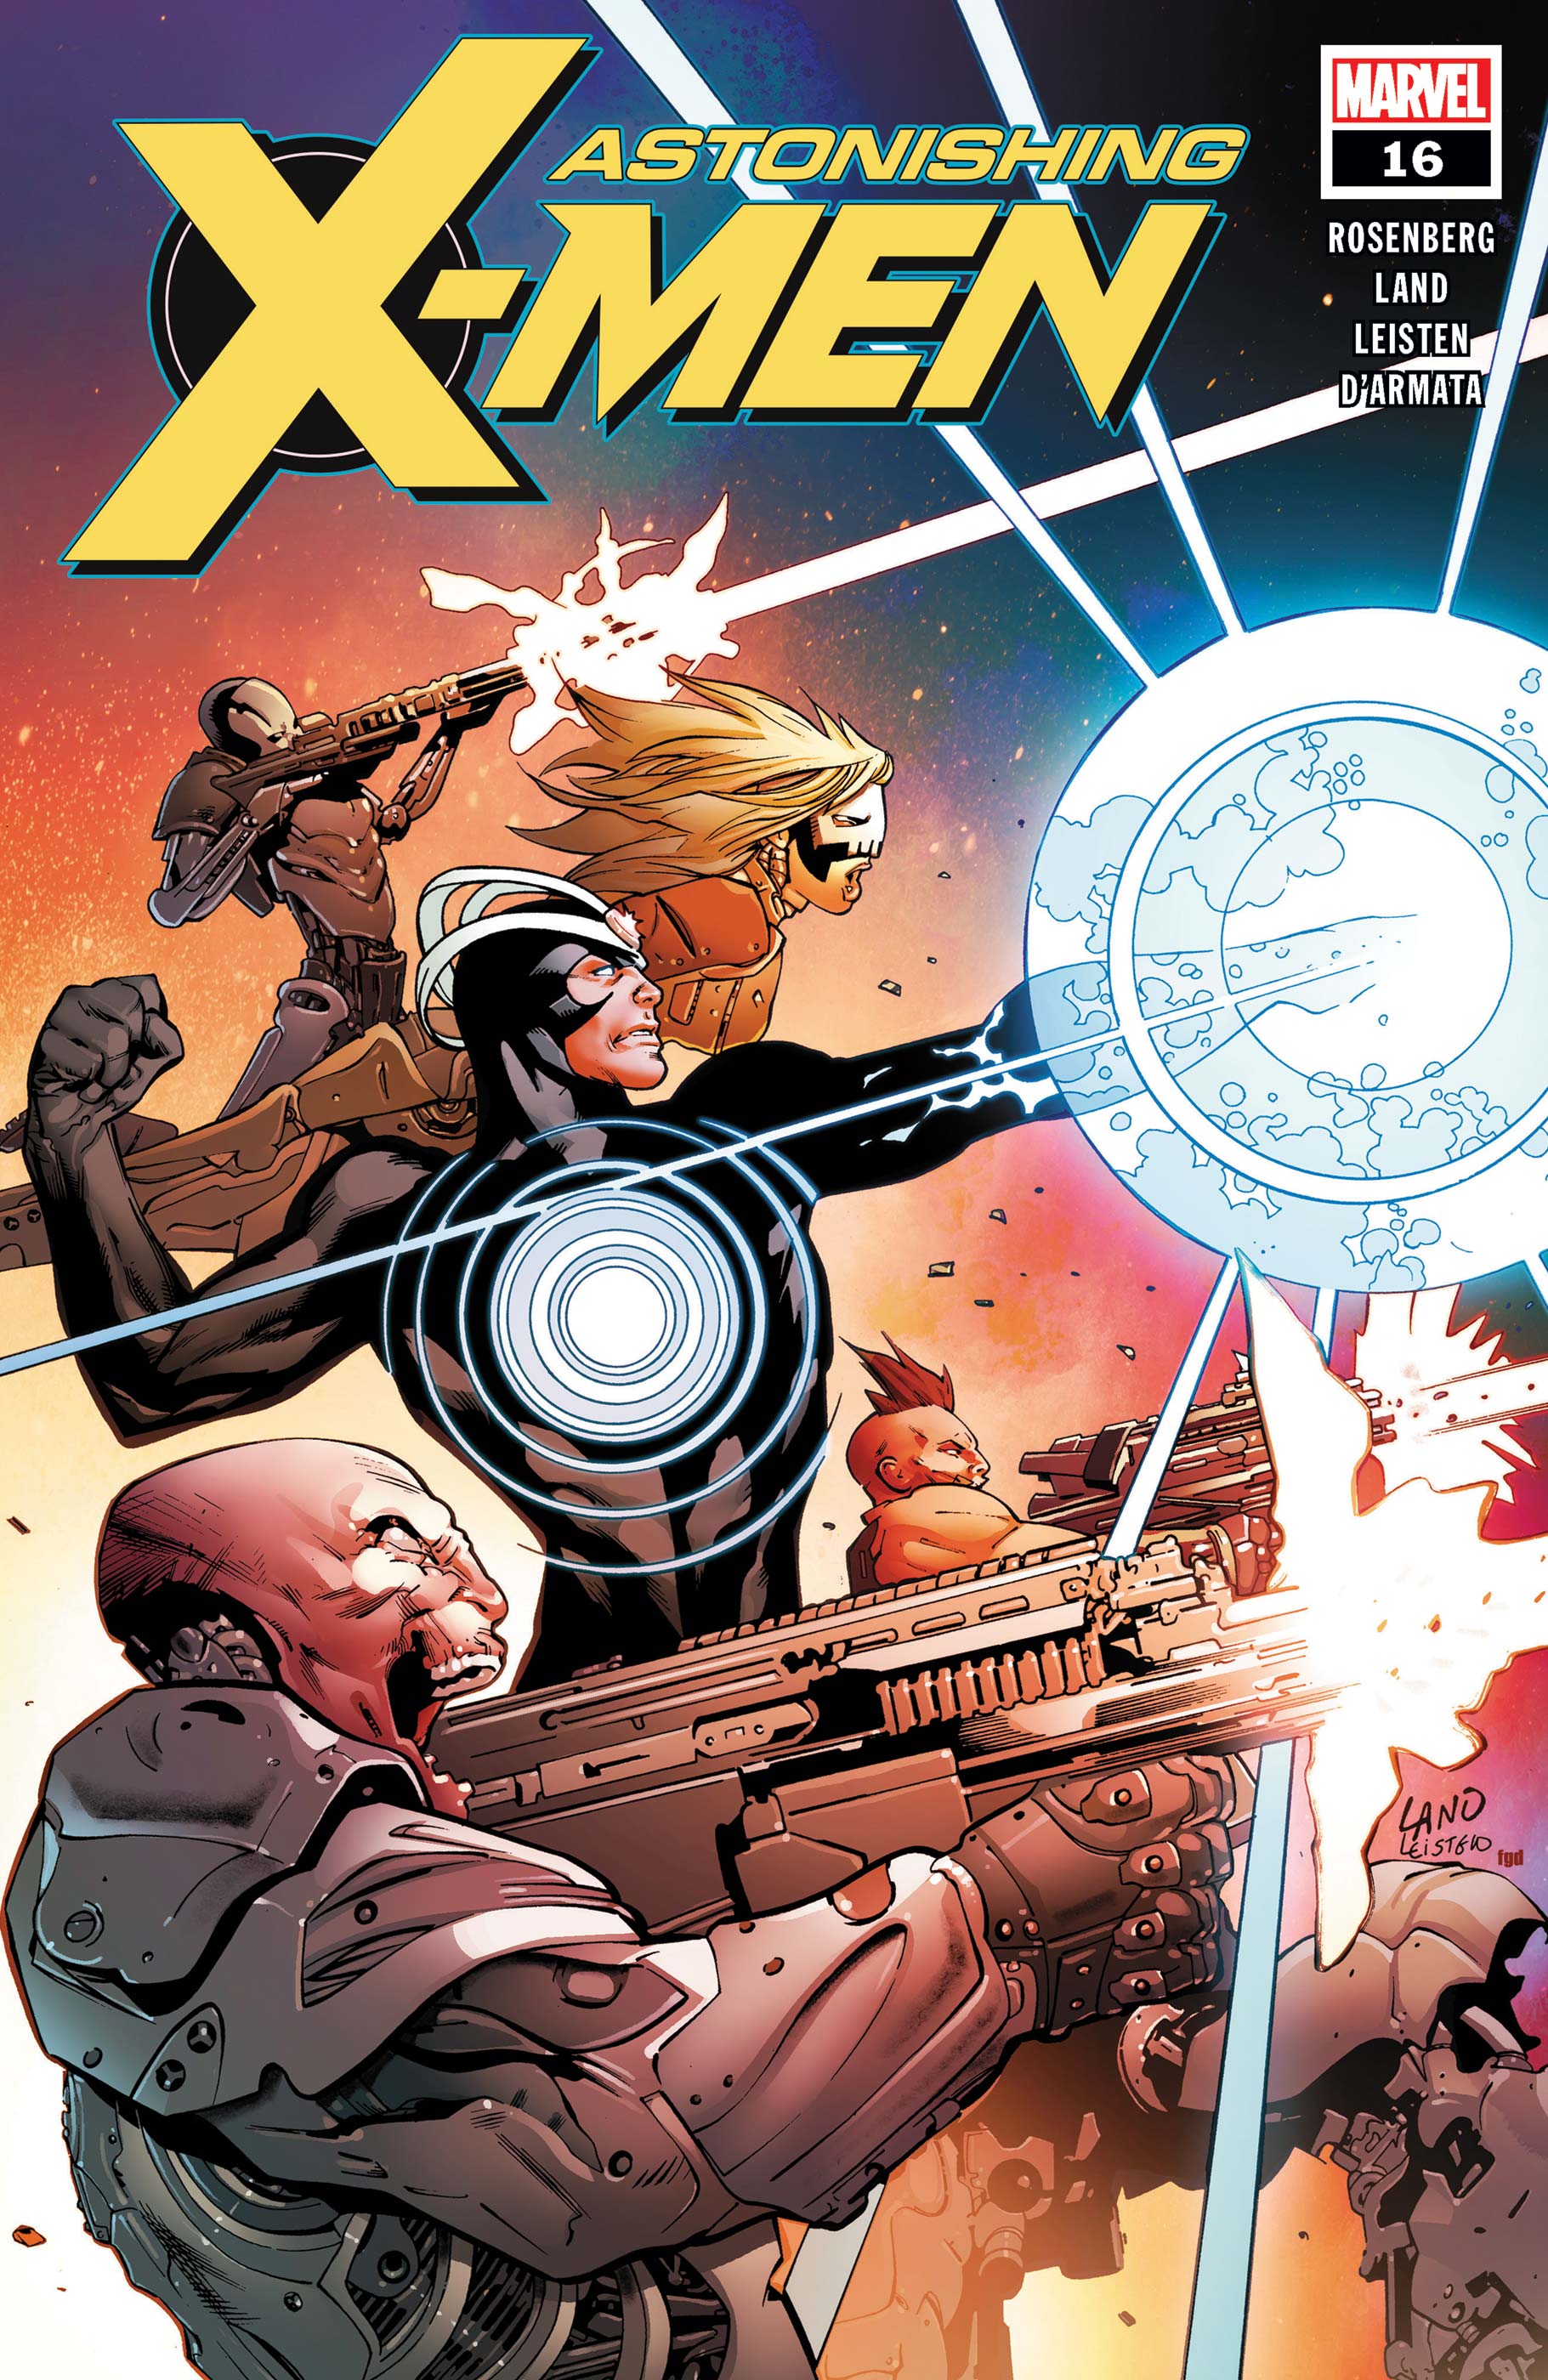 ASTONISHING X-MEN #11 MAIN COVER A MARVEL COMICS 2018 EB26